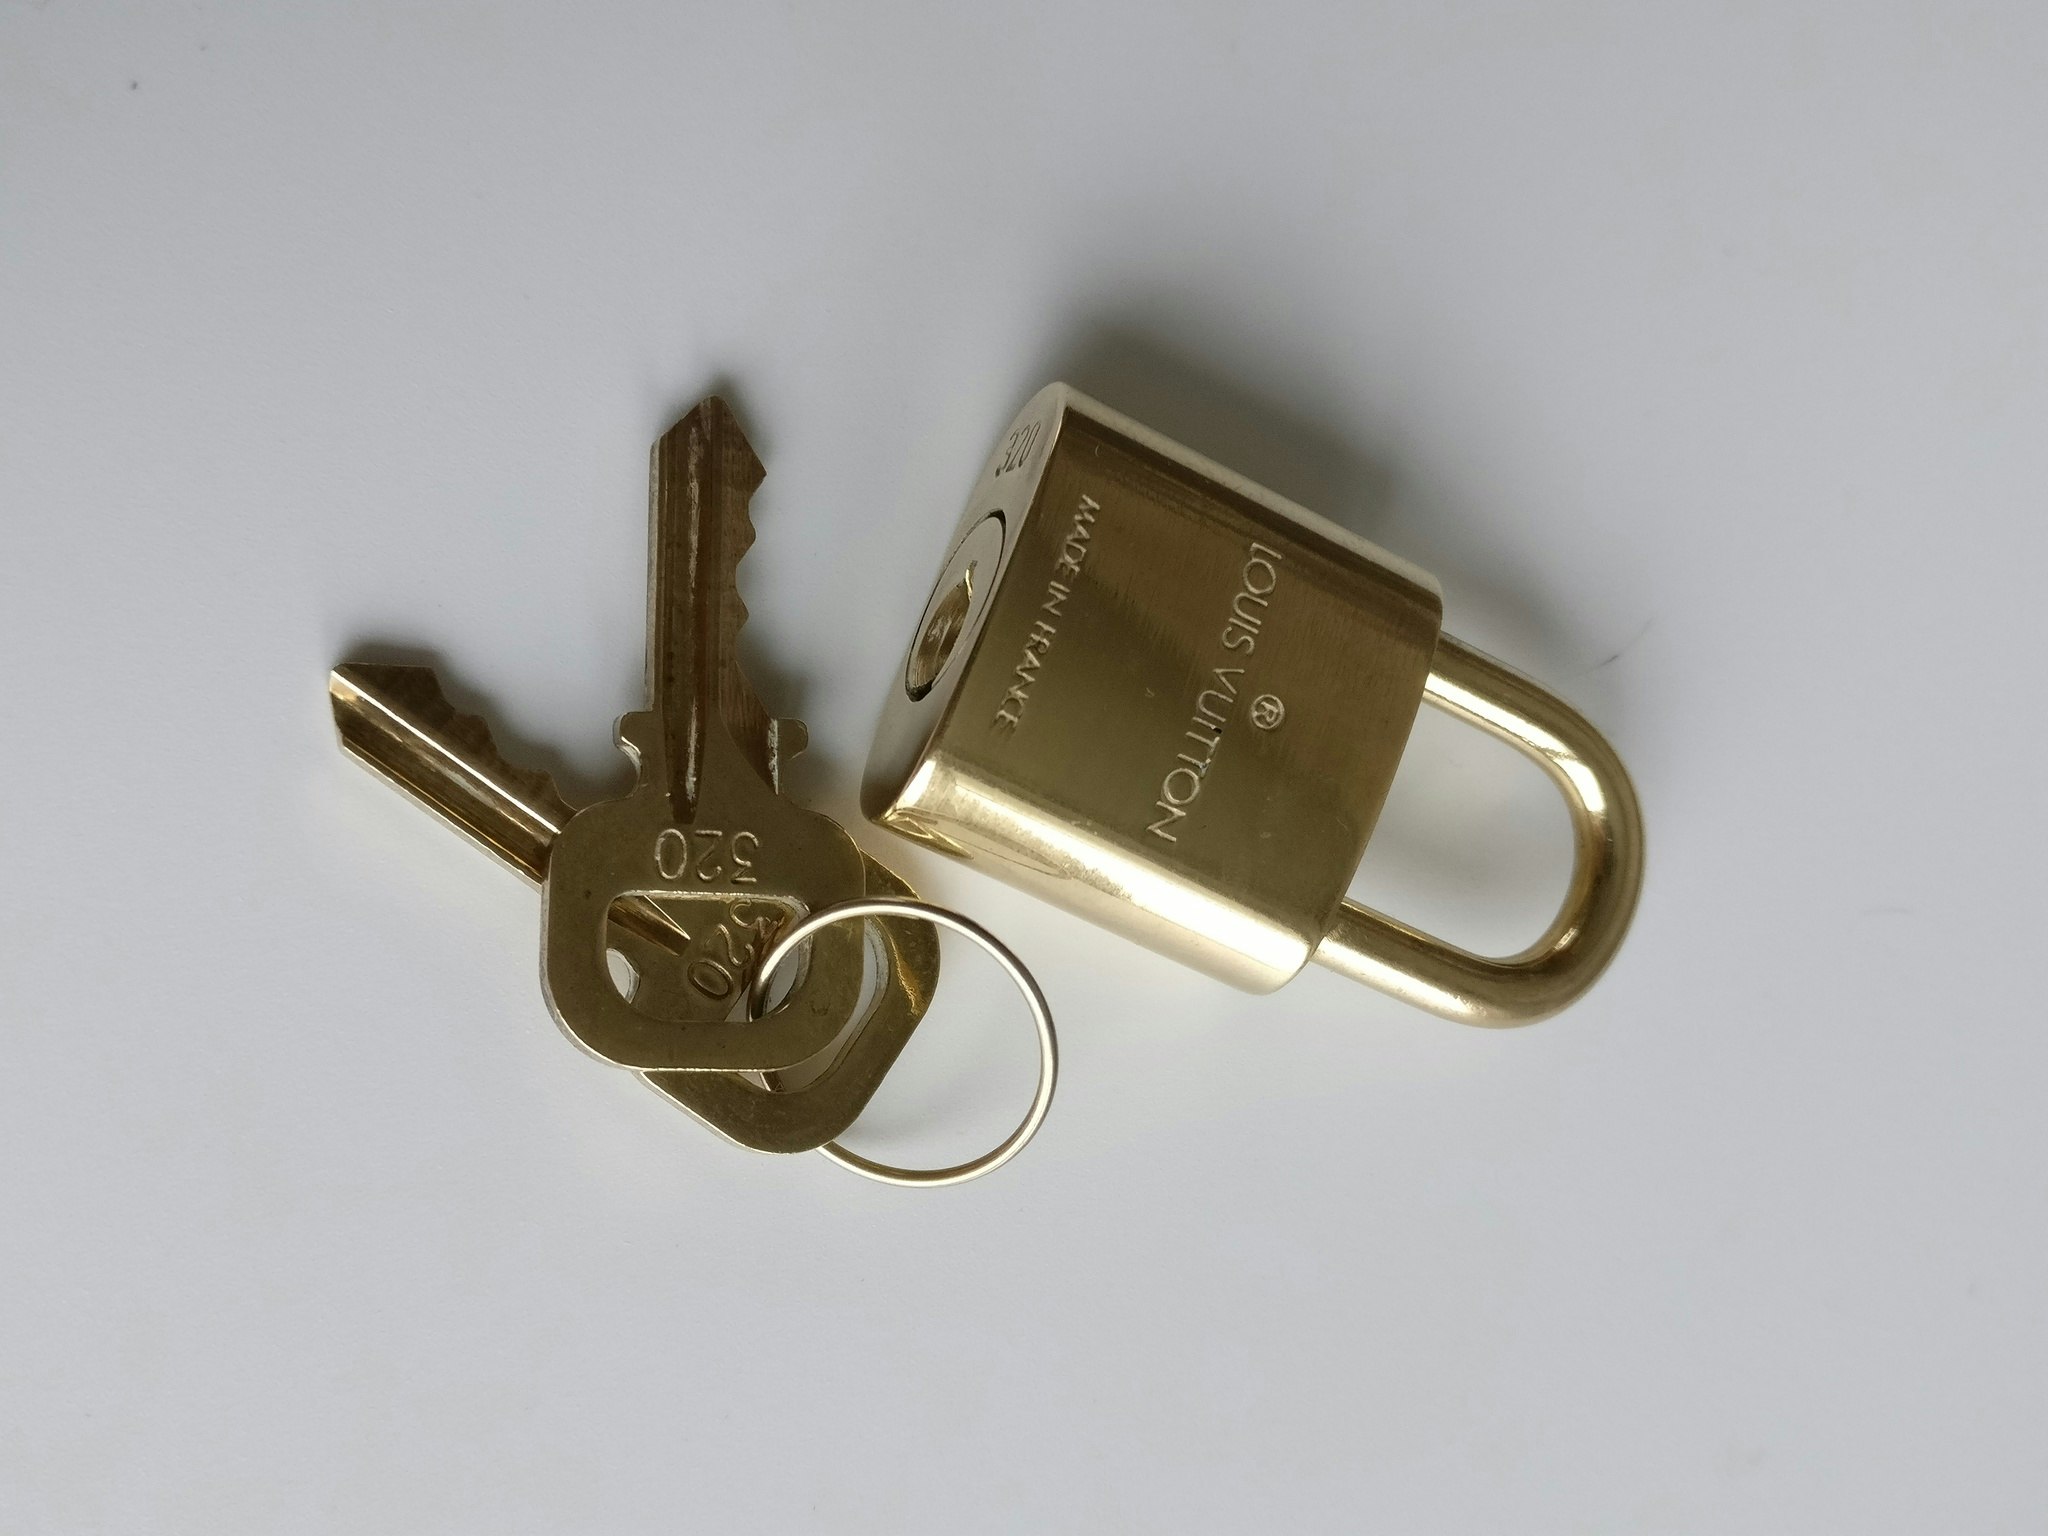 Louis Vuitton Padlock & 2 Keys Bag Charm Number 320